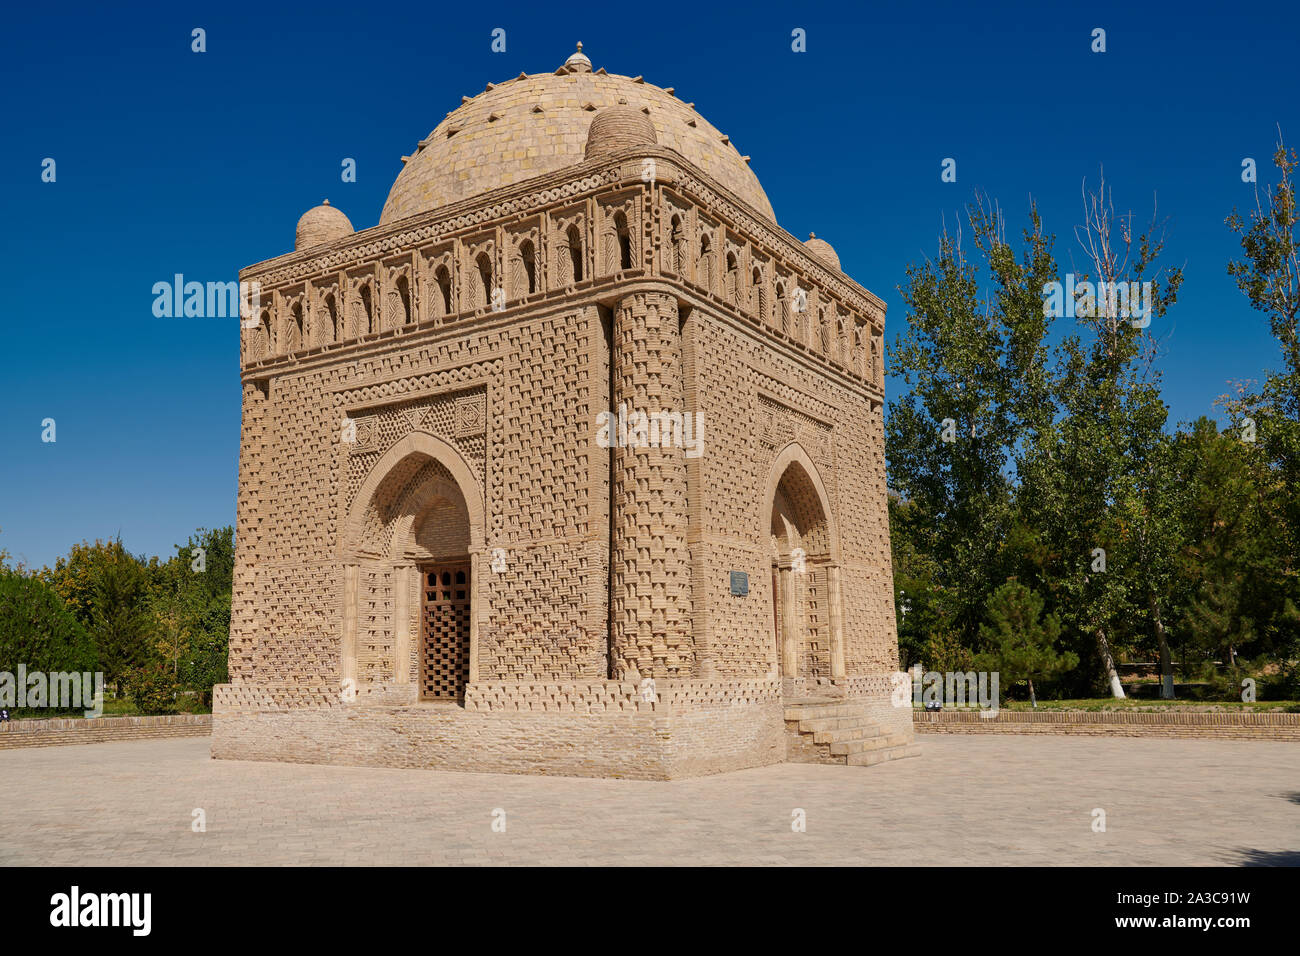 Il Mausoleo di Ismail Samani, Ismoil Somoniy maqbarasi, Bukhara, Uzbekistan in Asia centrale Foto Stock